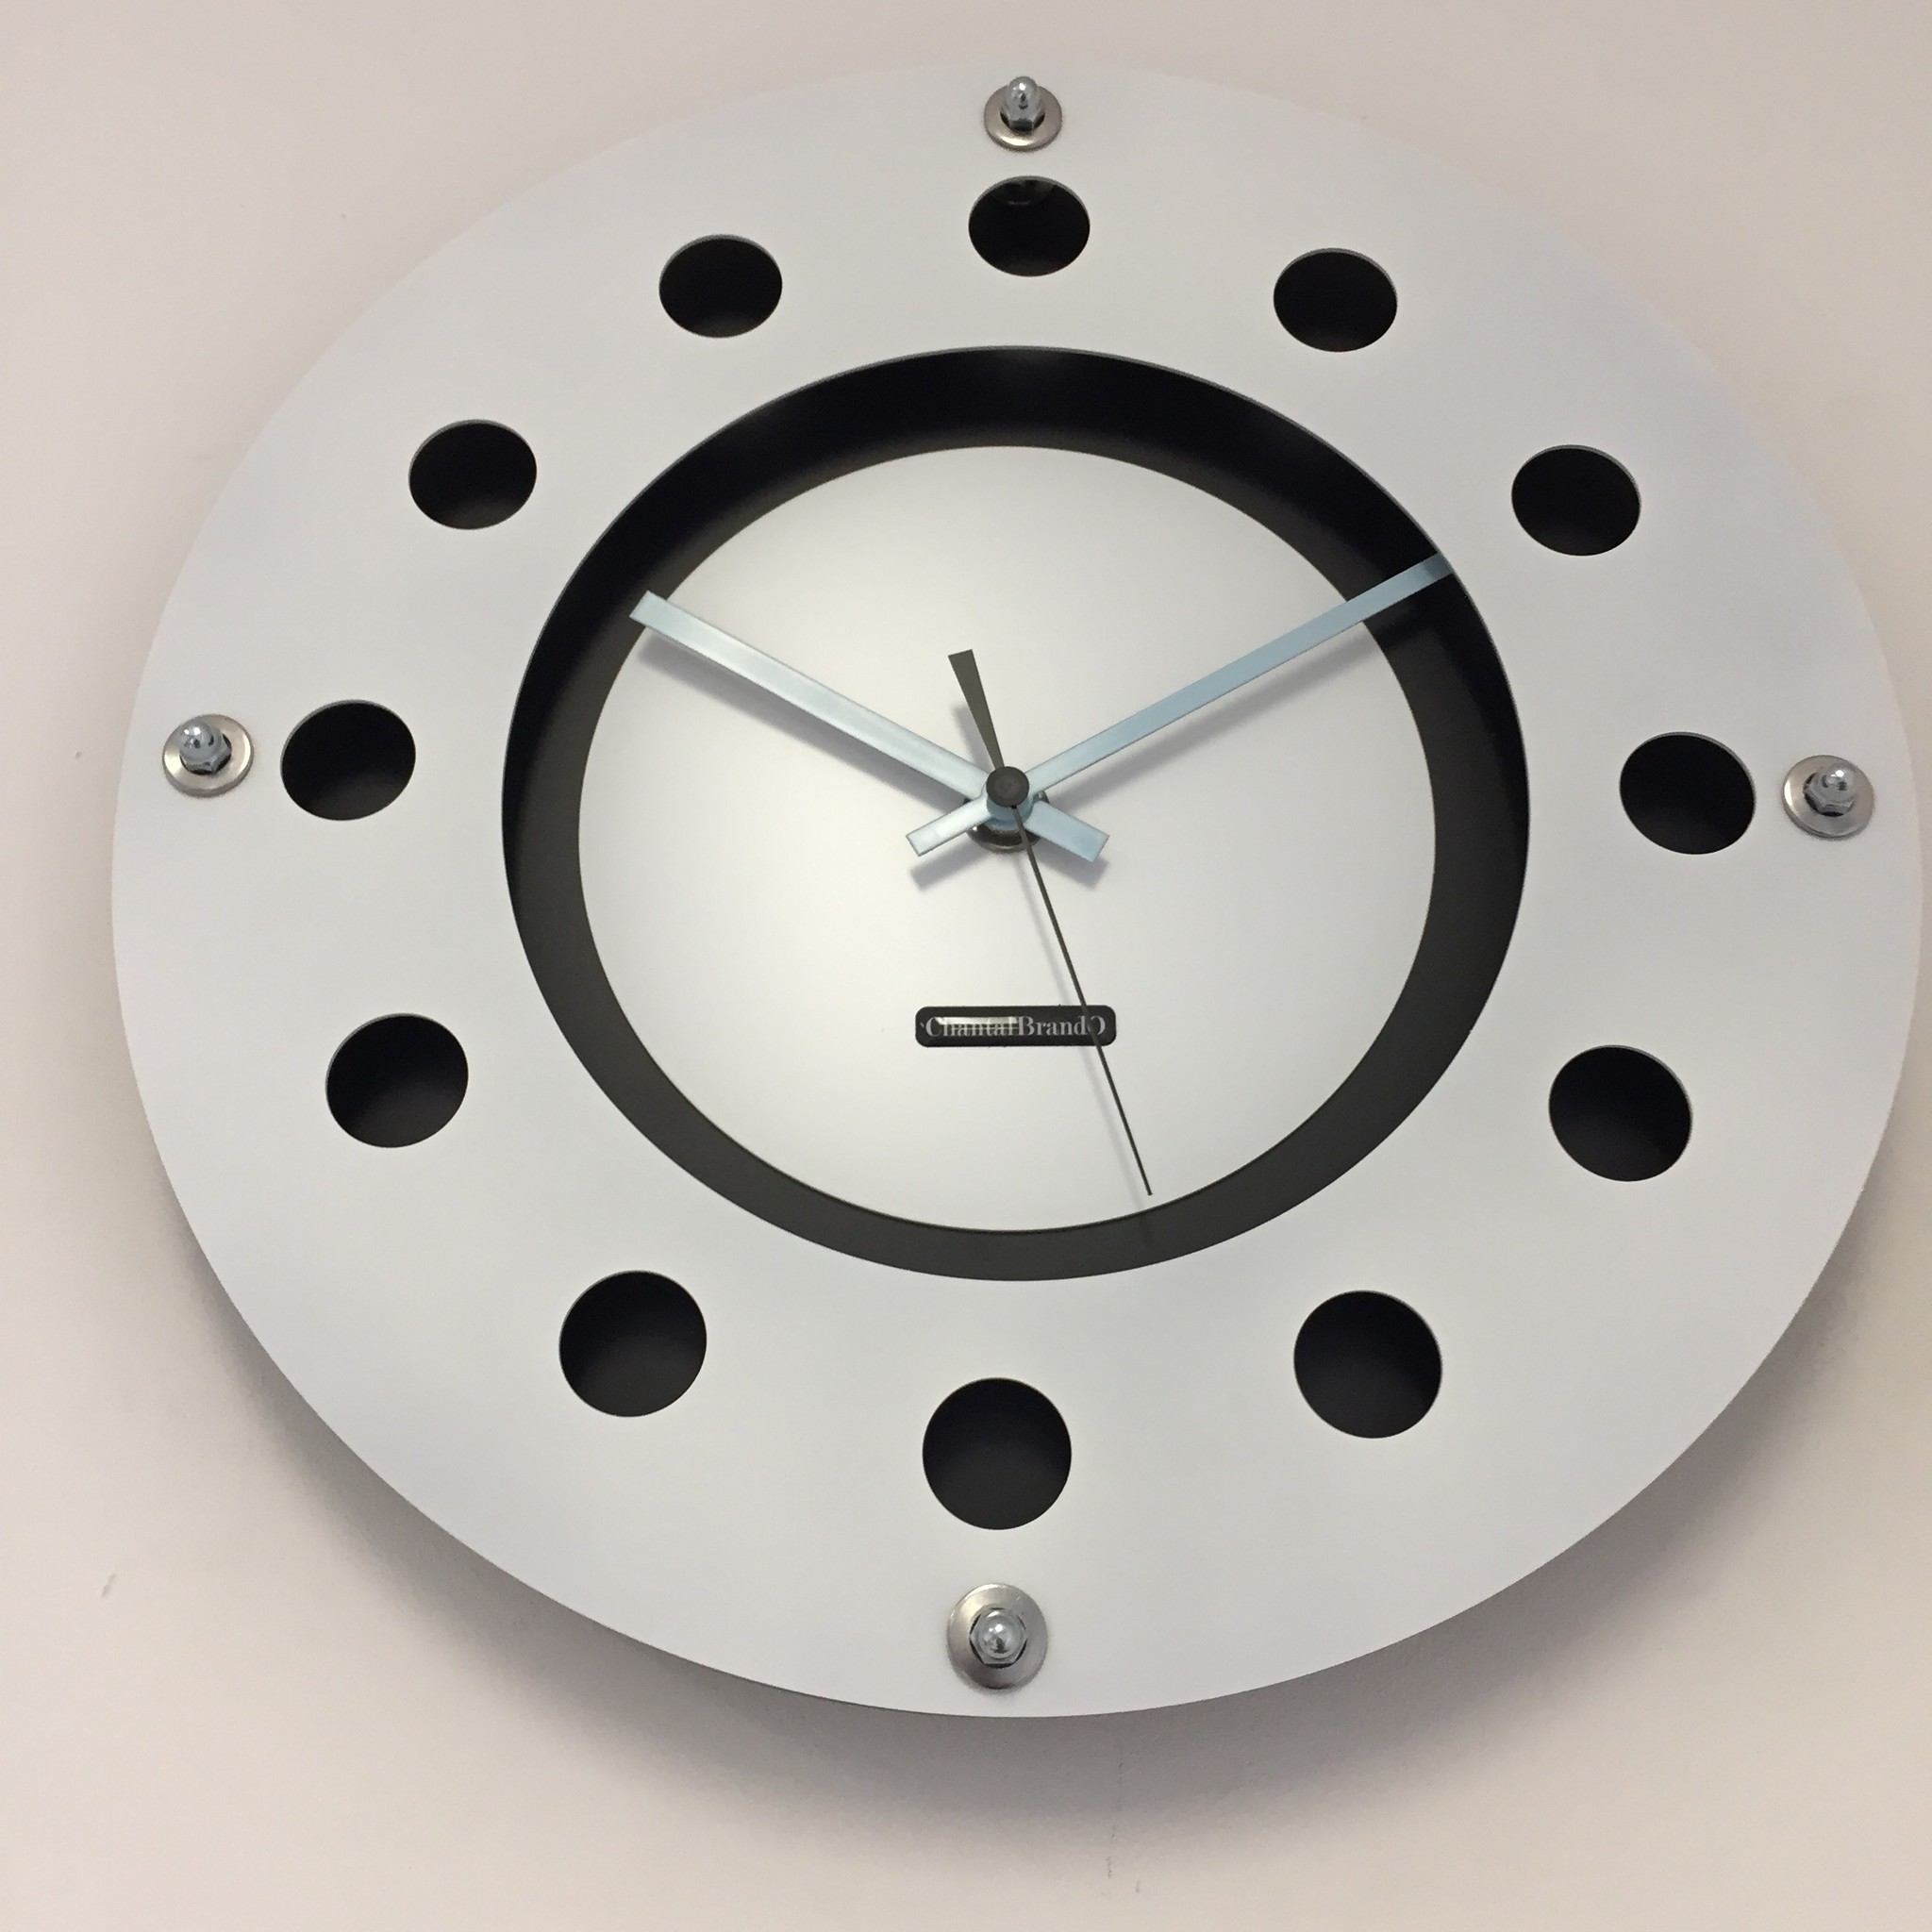 ChantalBrandO Design - Wall clock White Flens Mecanica Entire Black with white small inside Circle Blued Pointer Modern Dutch Design Handmade 40 cm